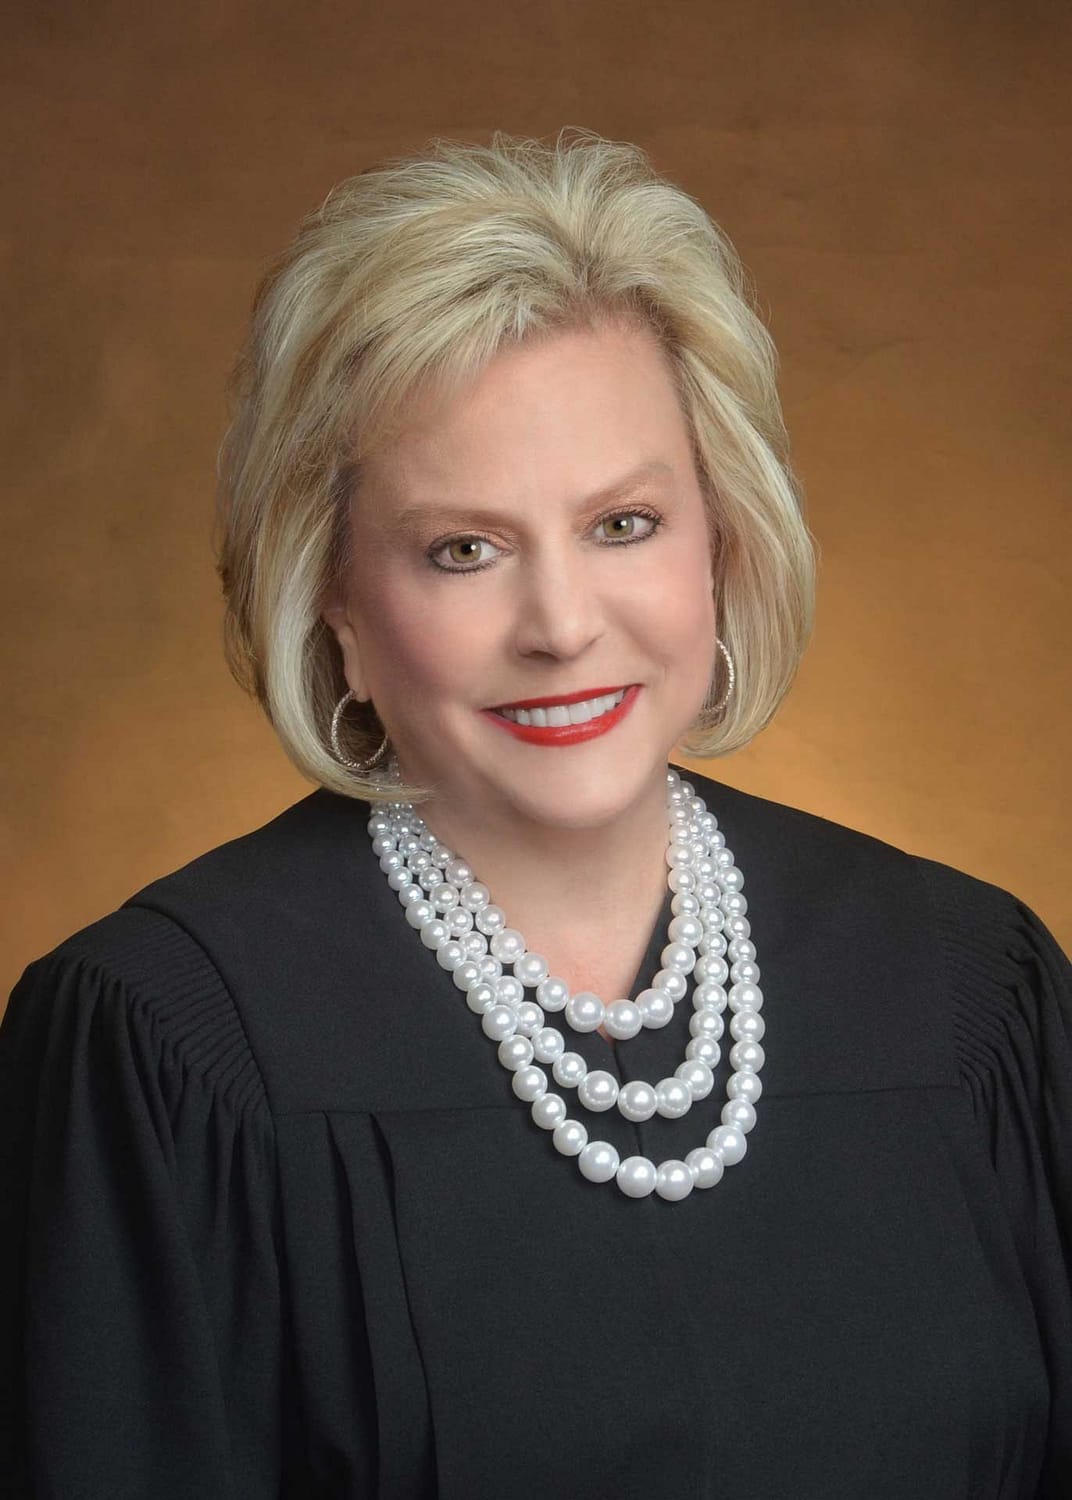 Judge Christy Little